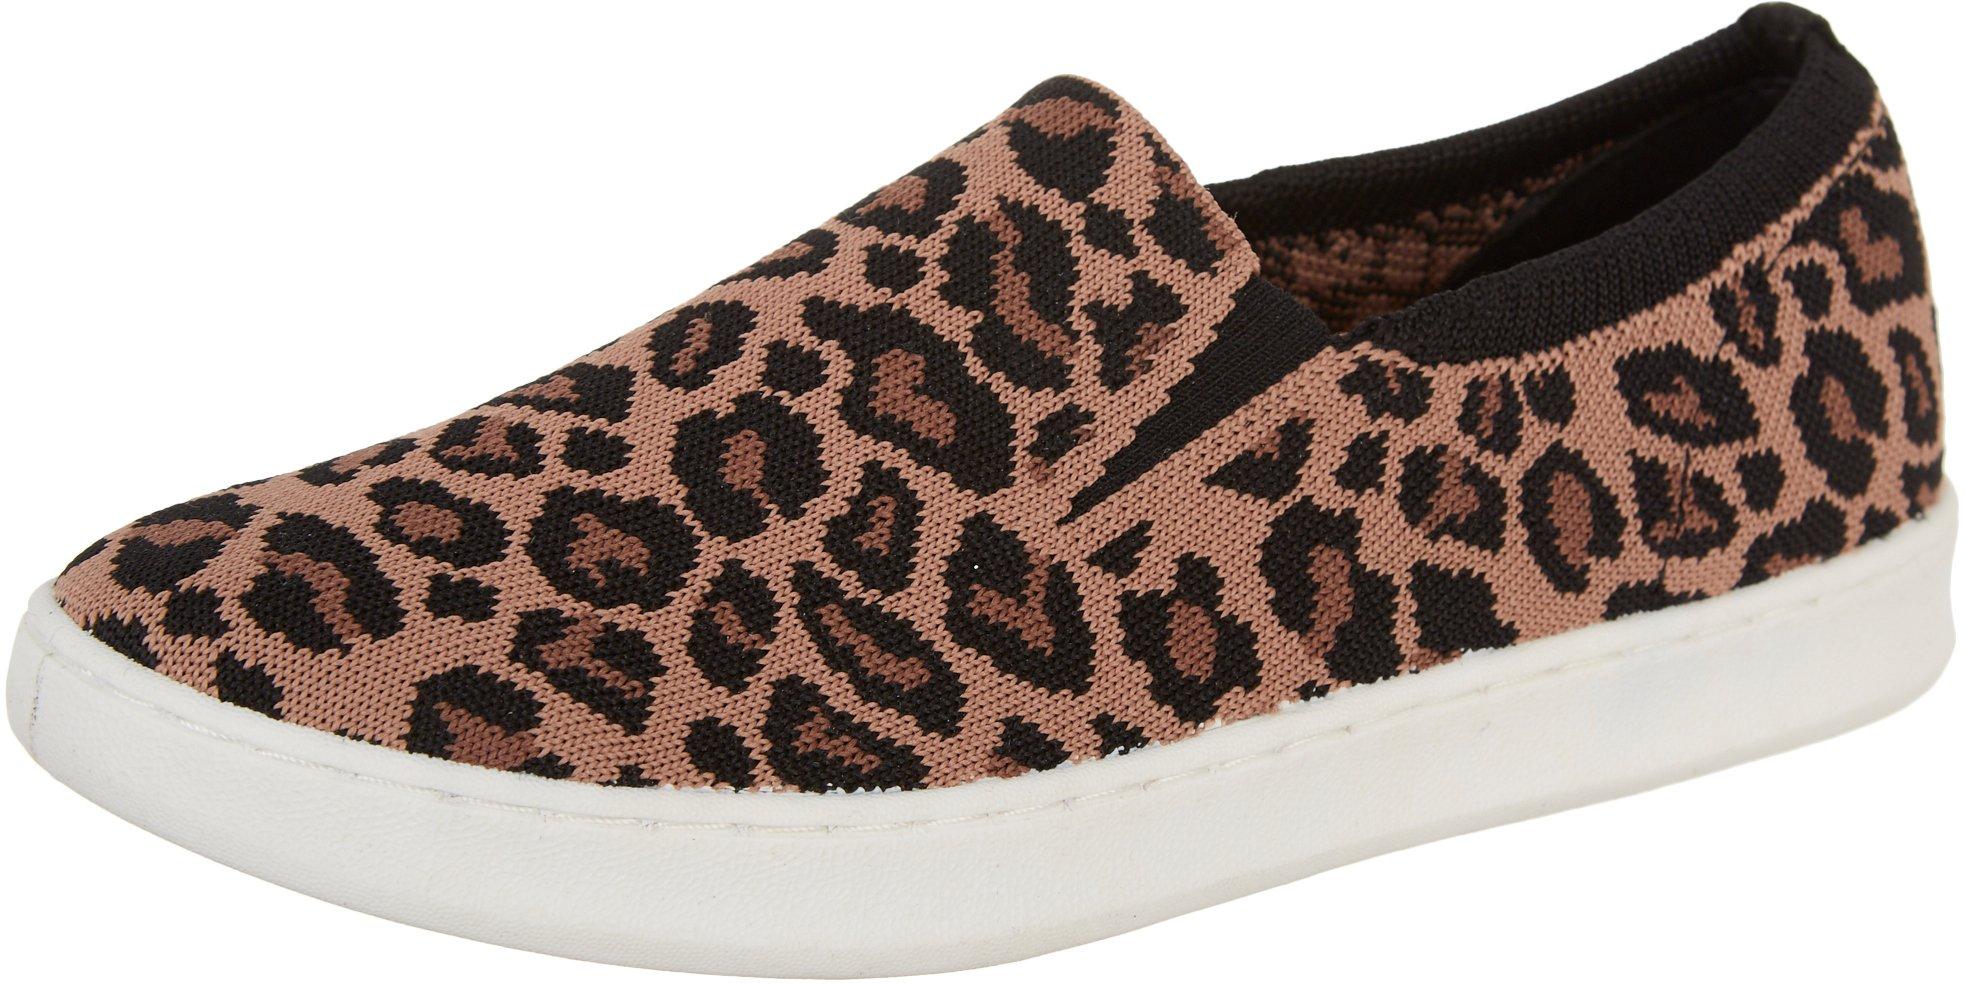 leopard print skechers shoes